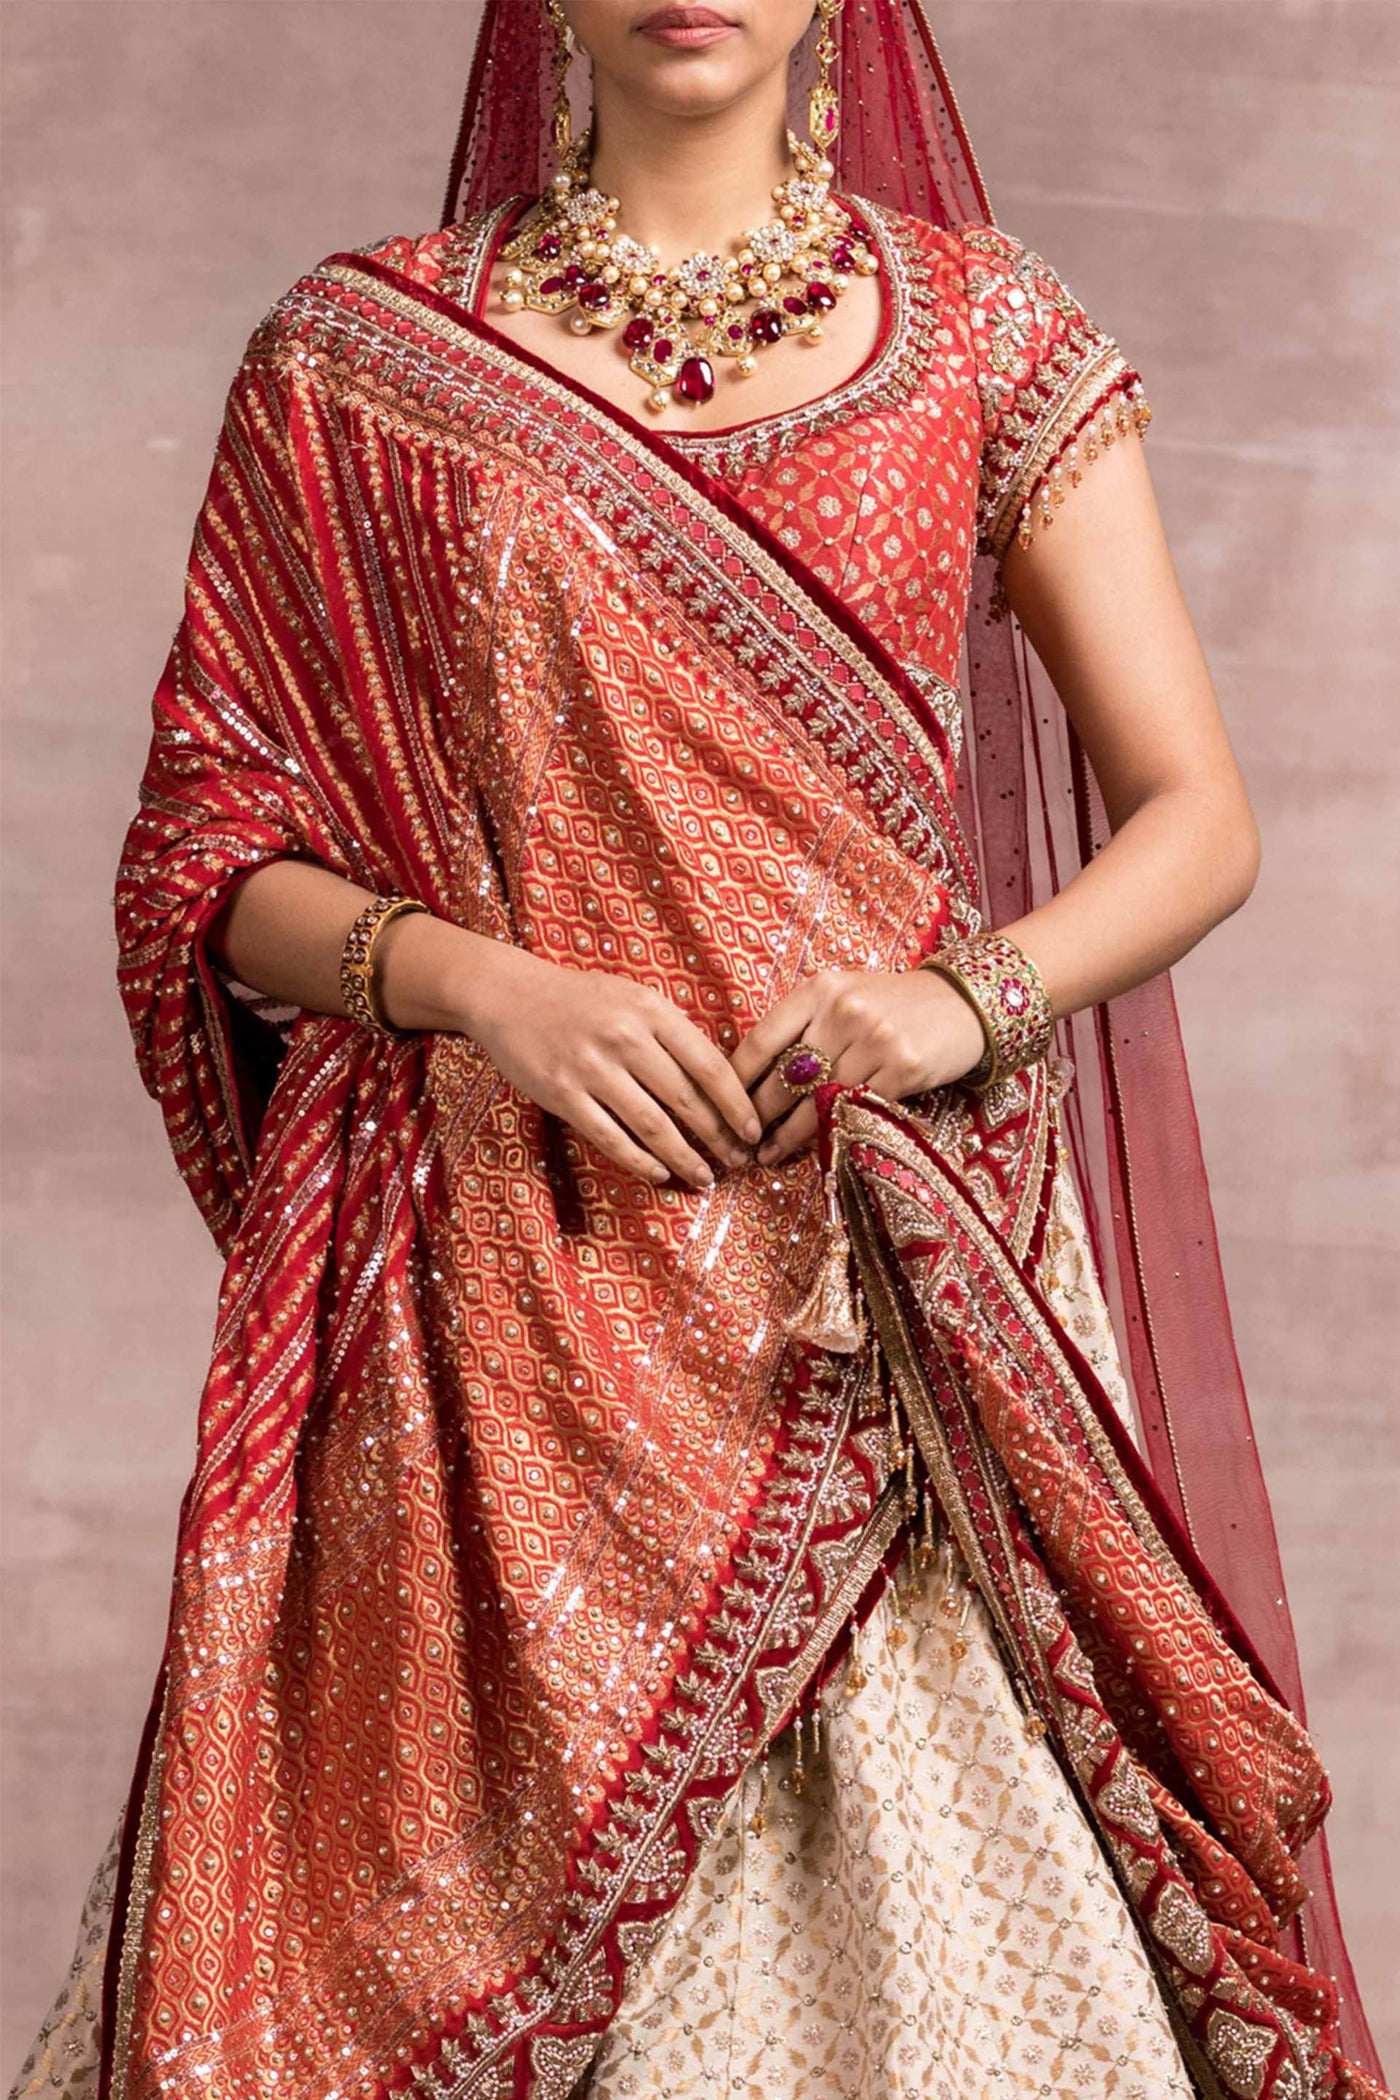 Tarun Tahiliani Embroidered Brocade Lehenga With Blouse ivory red indian bridal wedding designer wear online shopping melange singapore